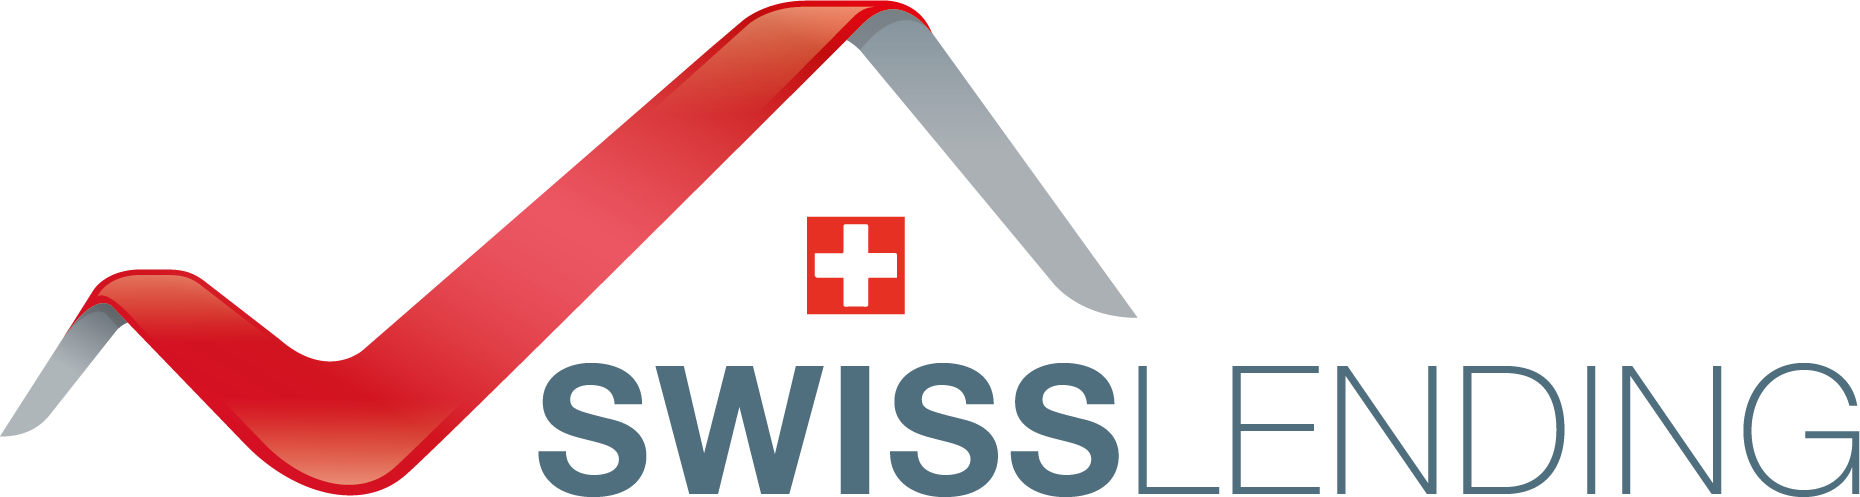 swisslending_logo